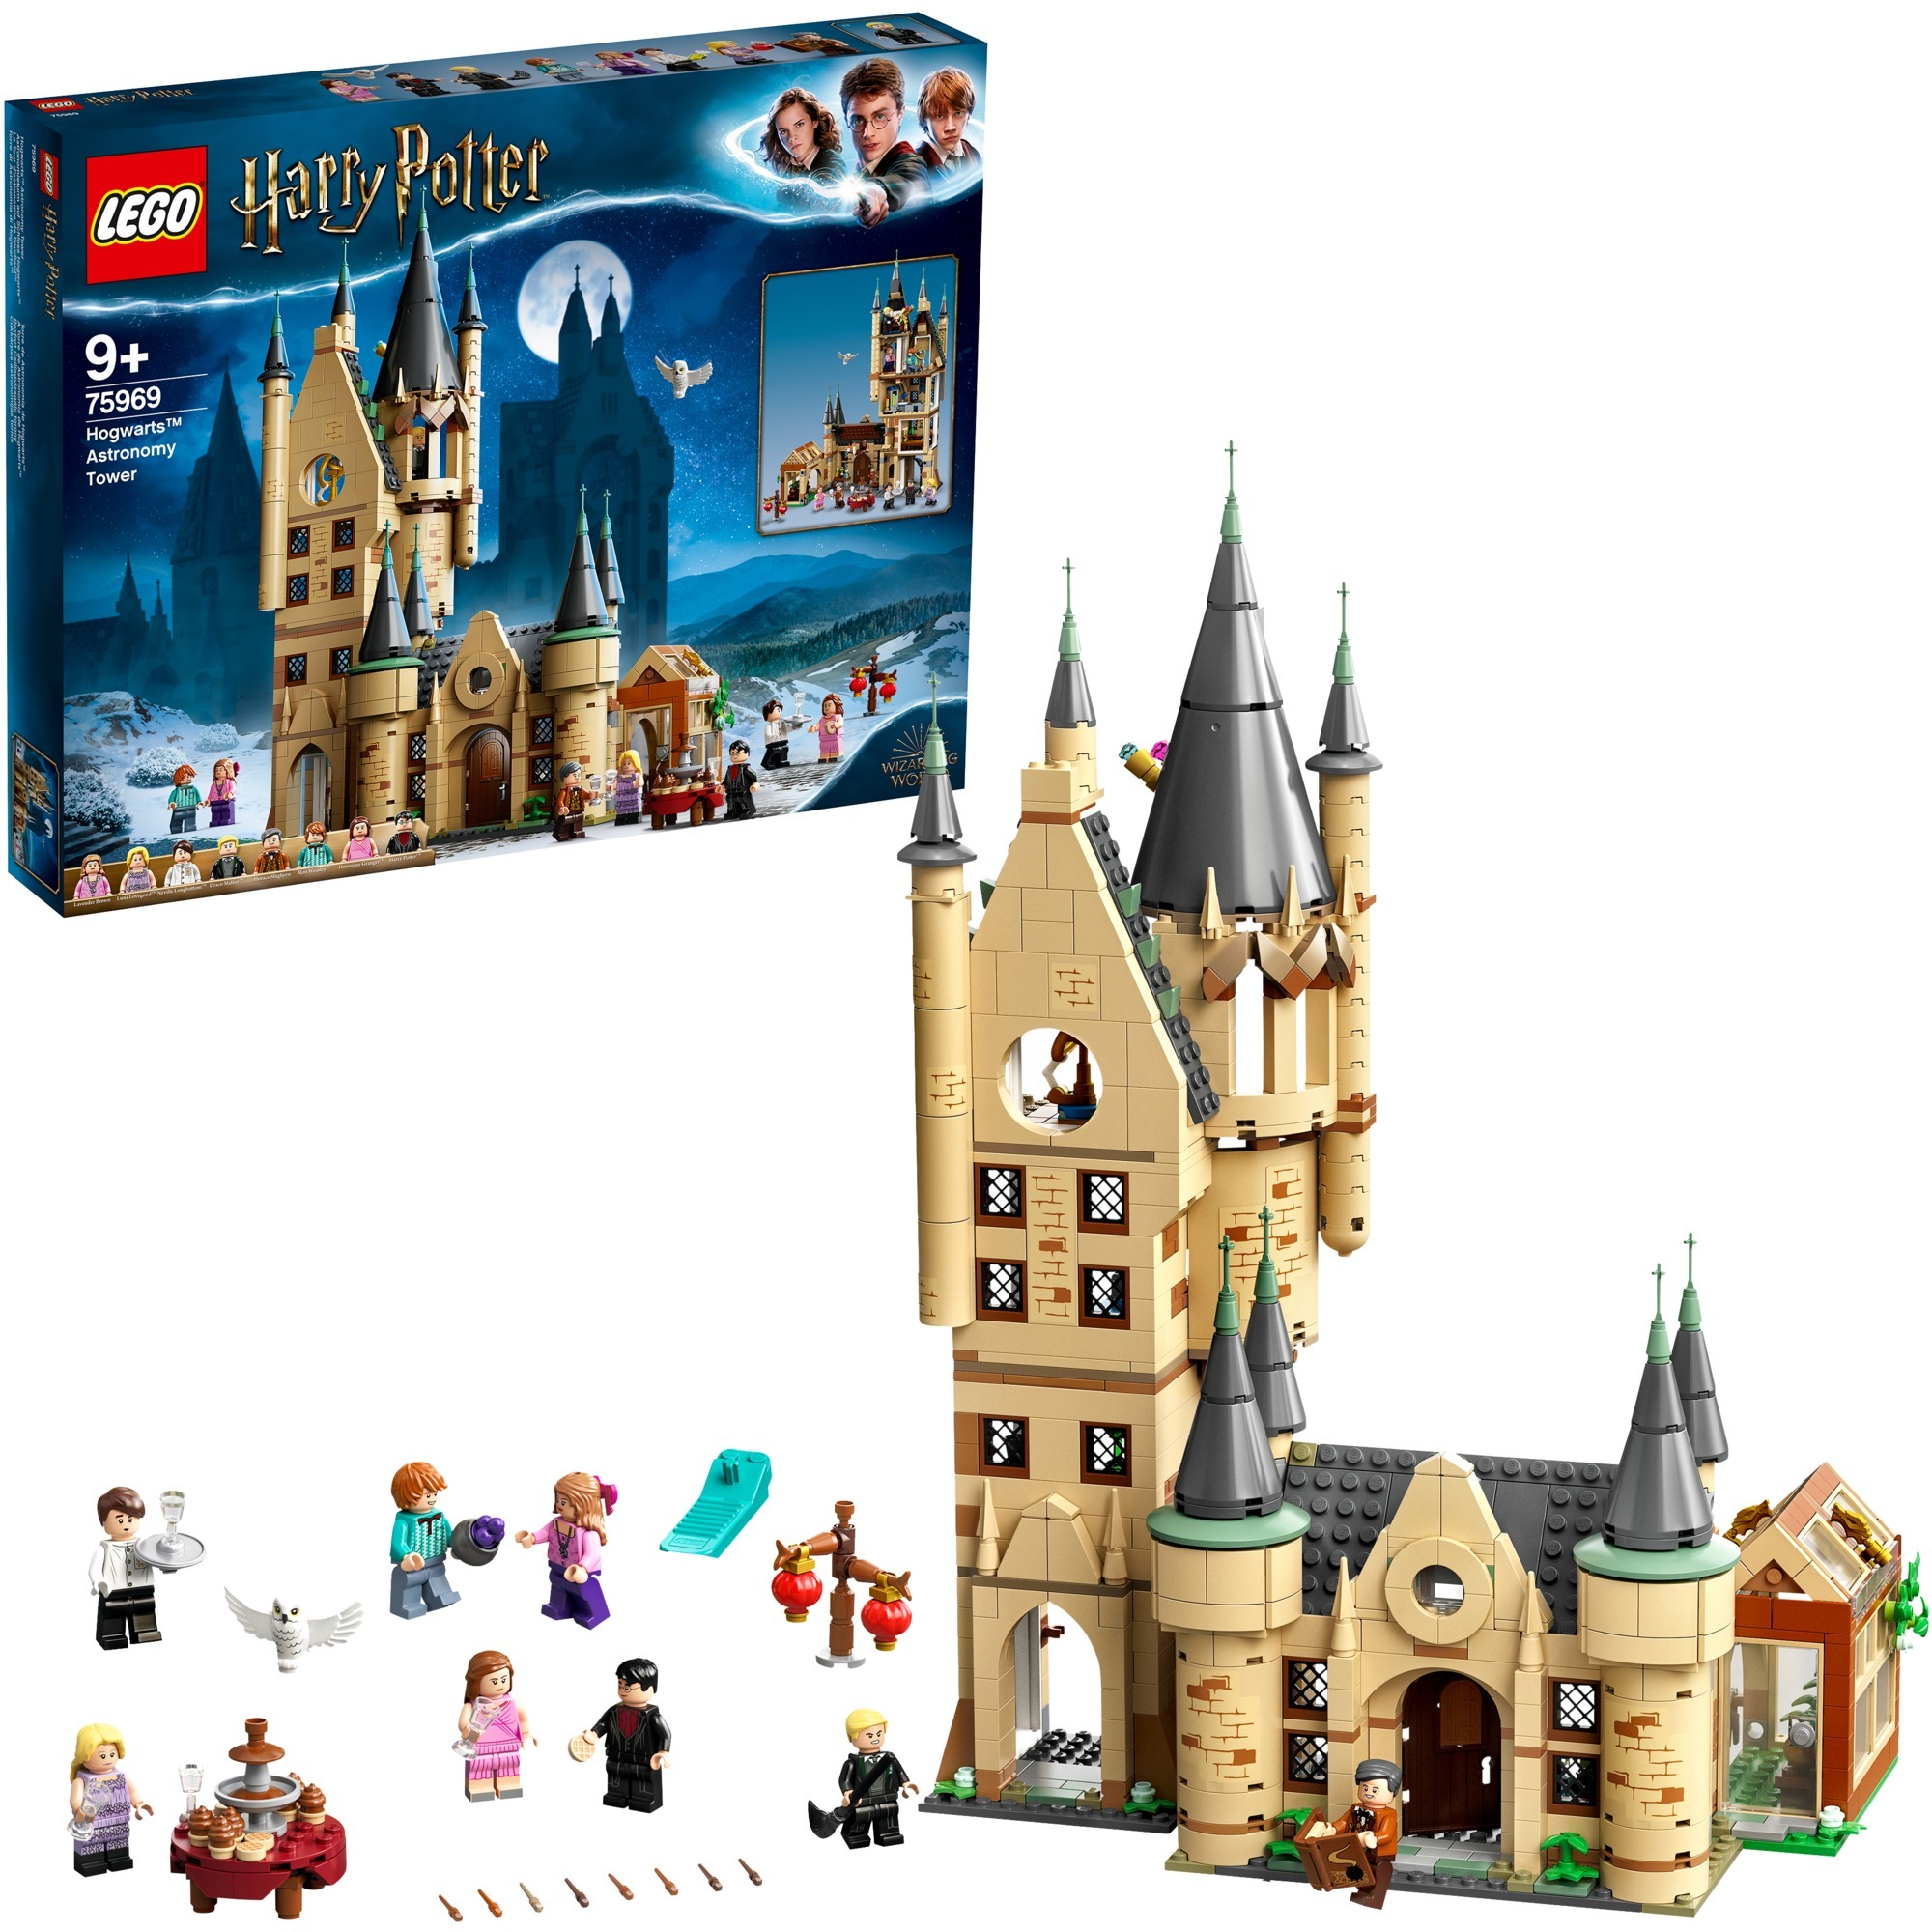 Spielzeug: Lego 75969 Harry Potter Astronomieturm auf Schloss Hogwarts